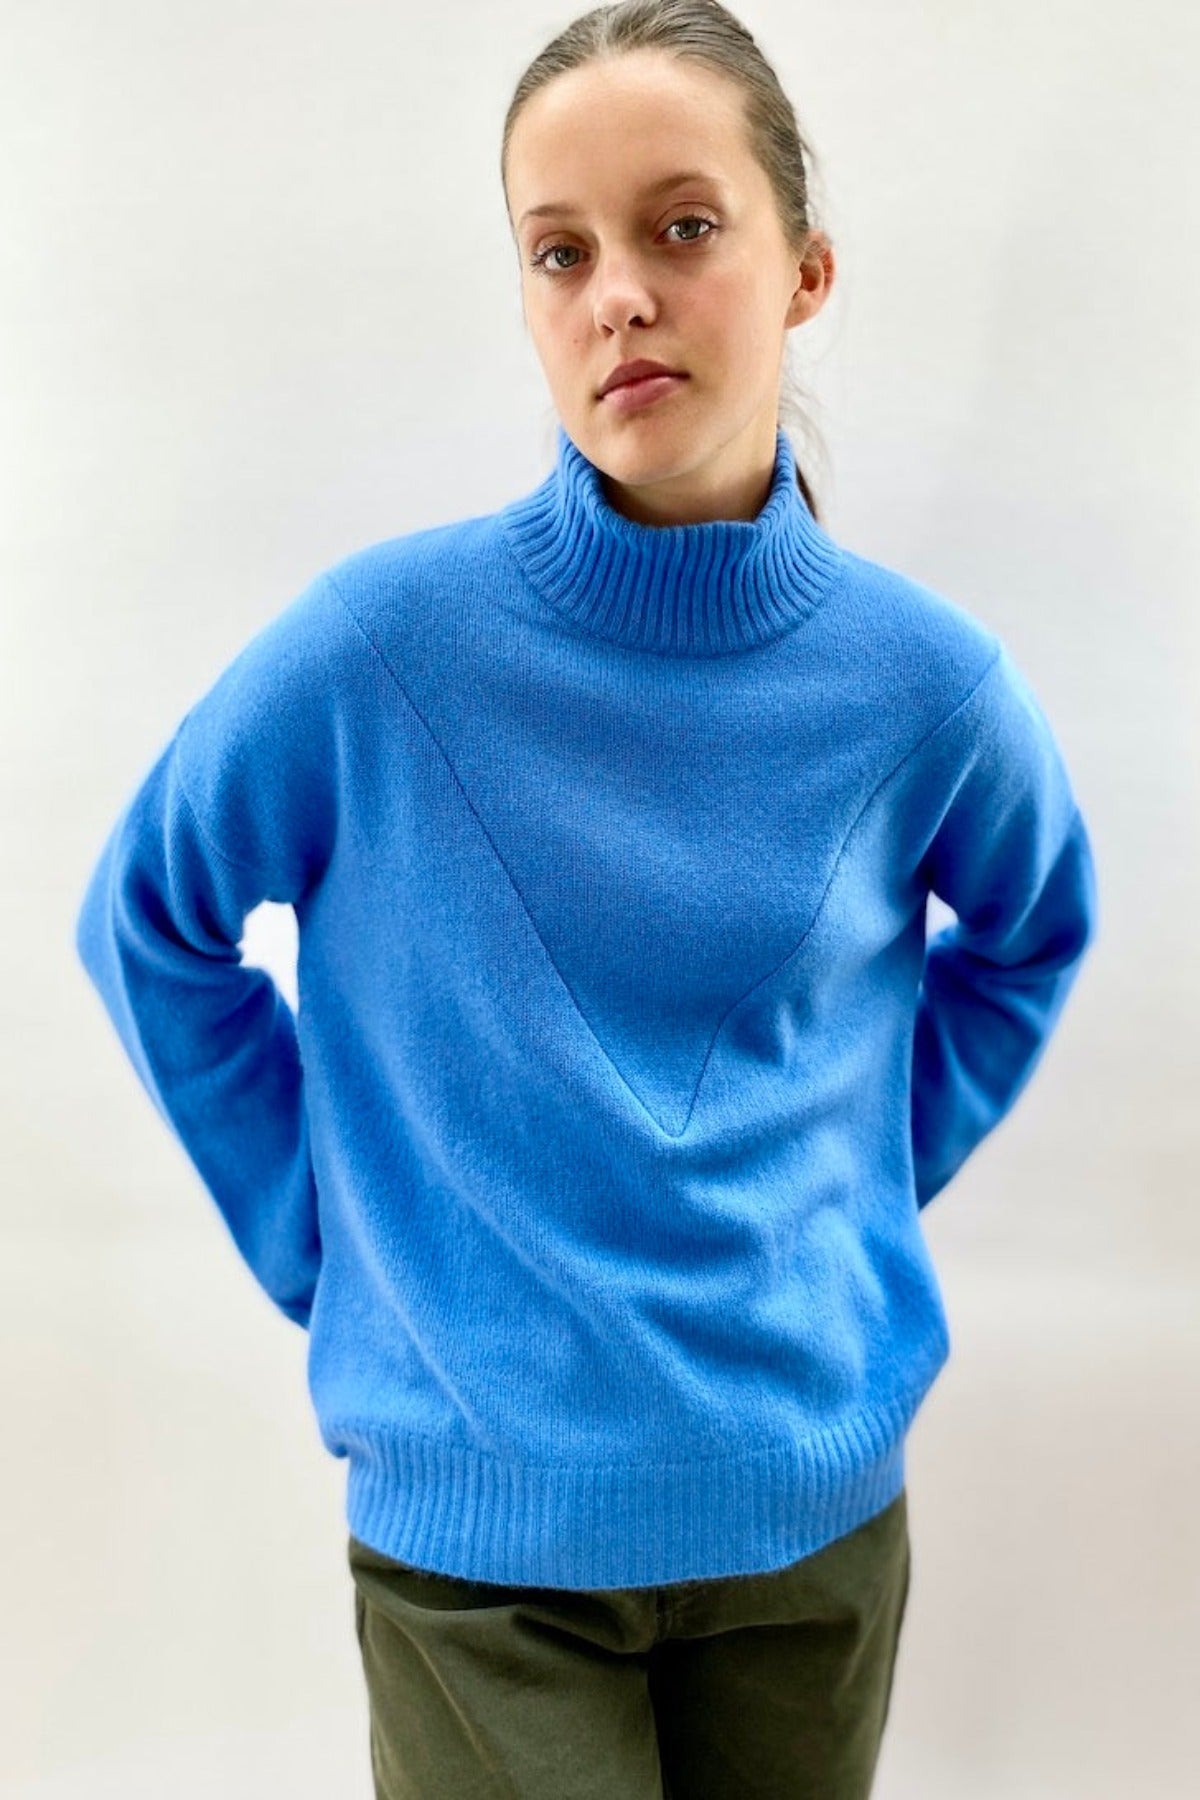 zelda cornflower high neck sweater v detail